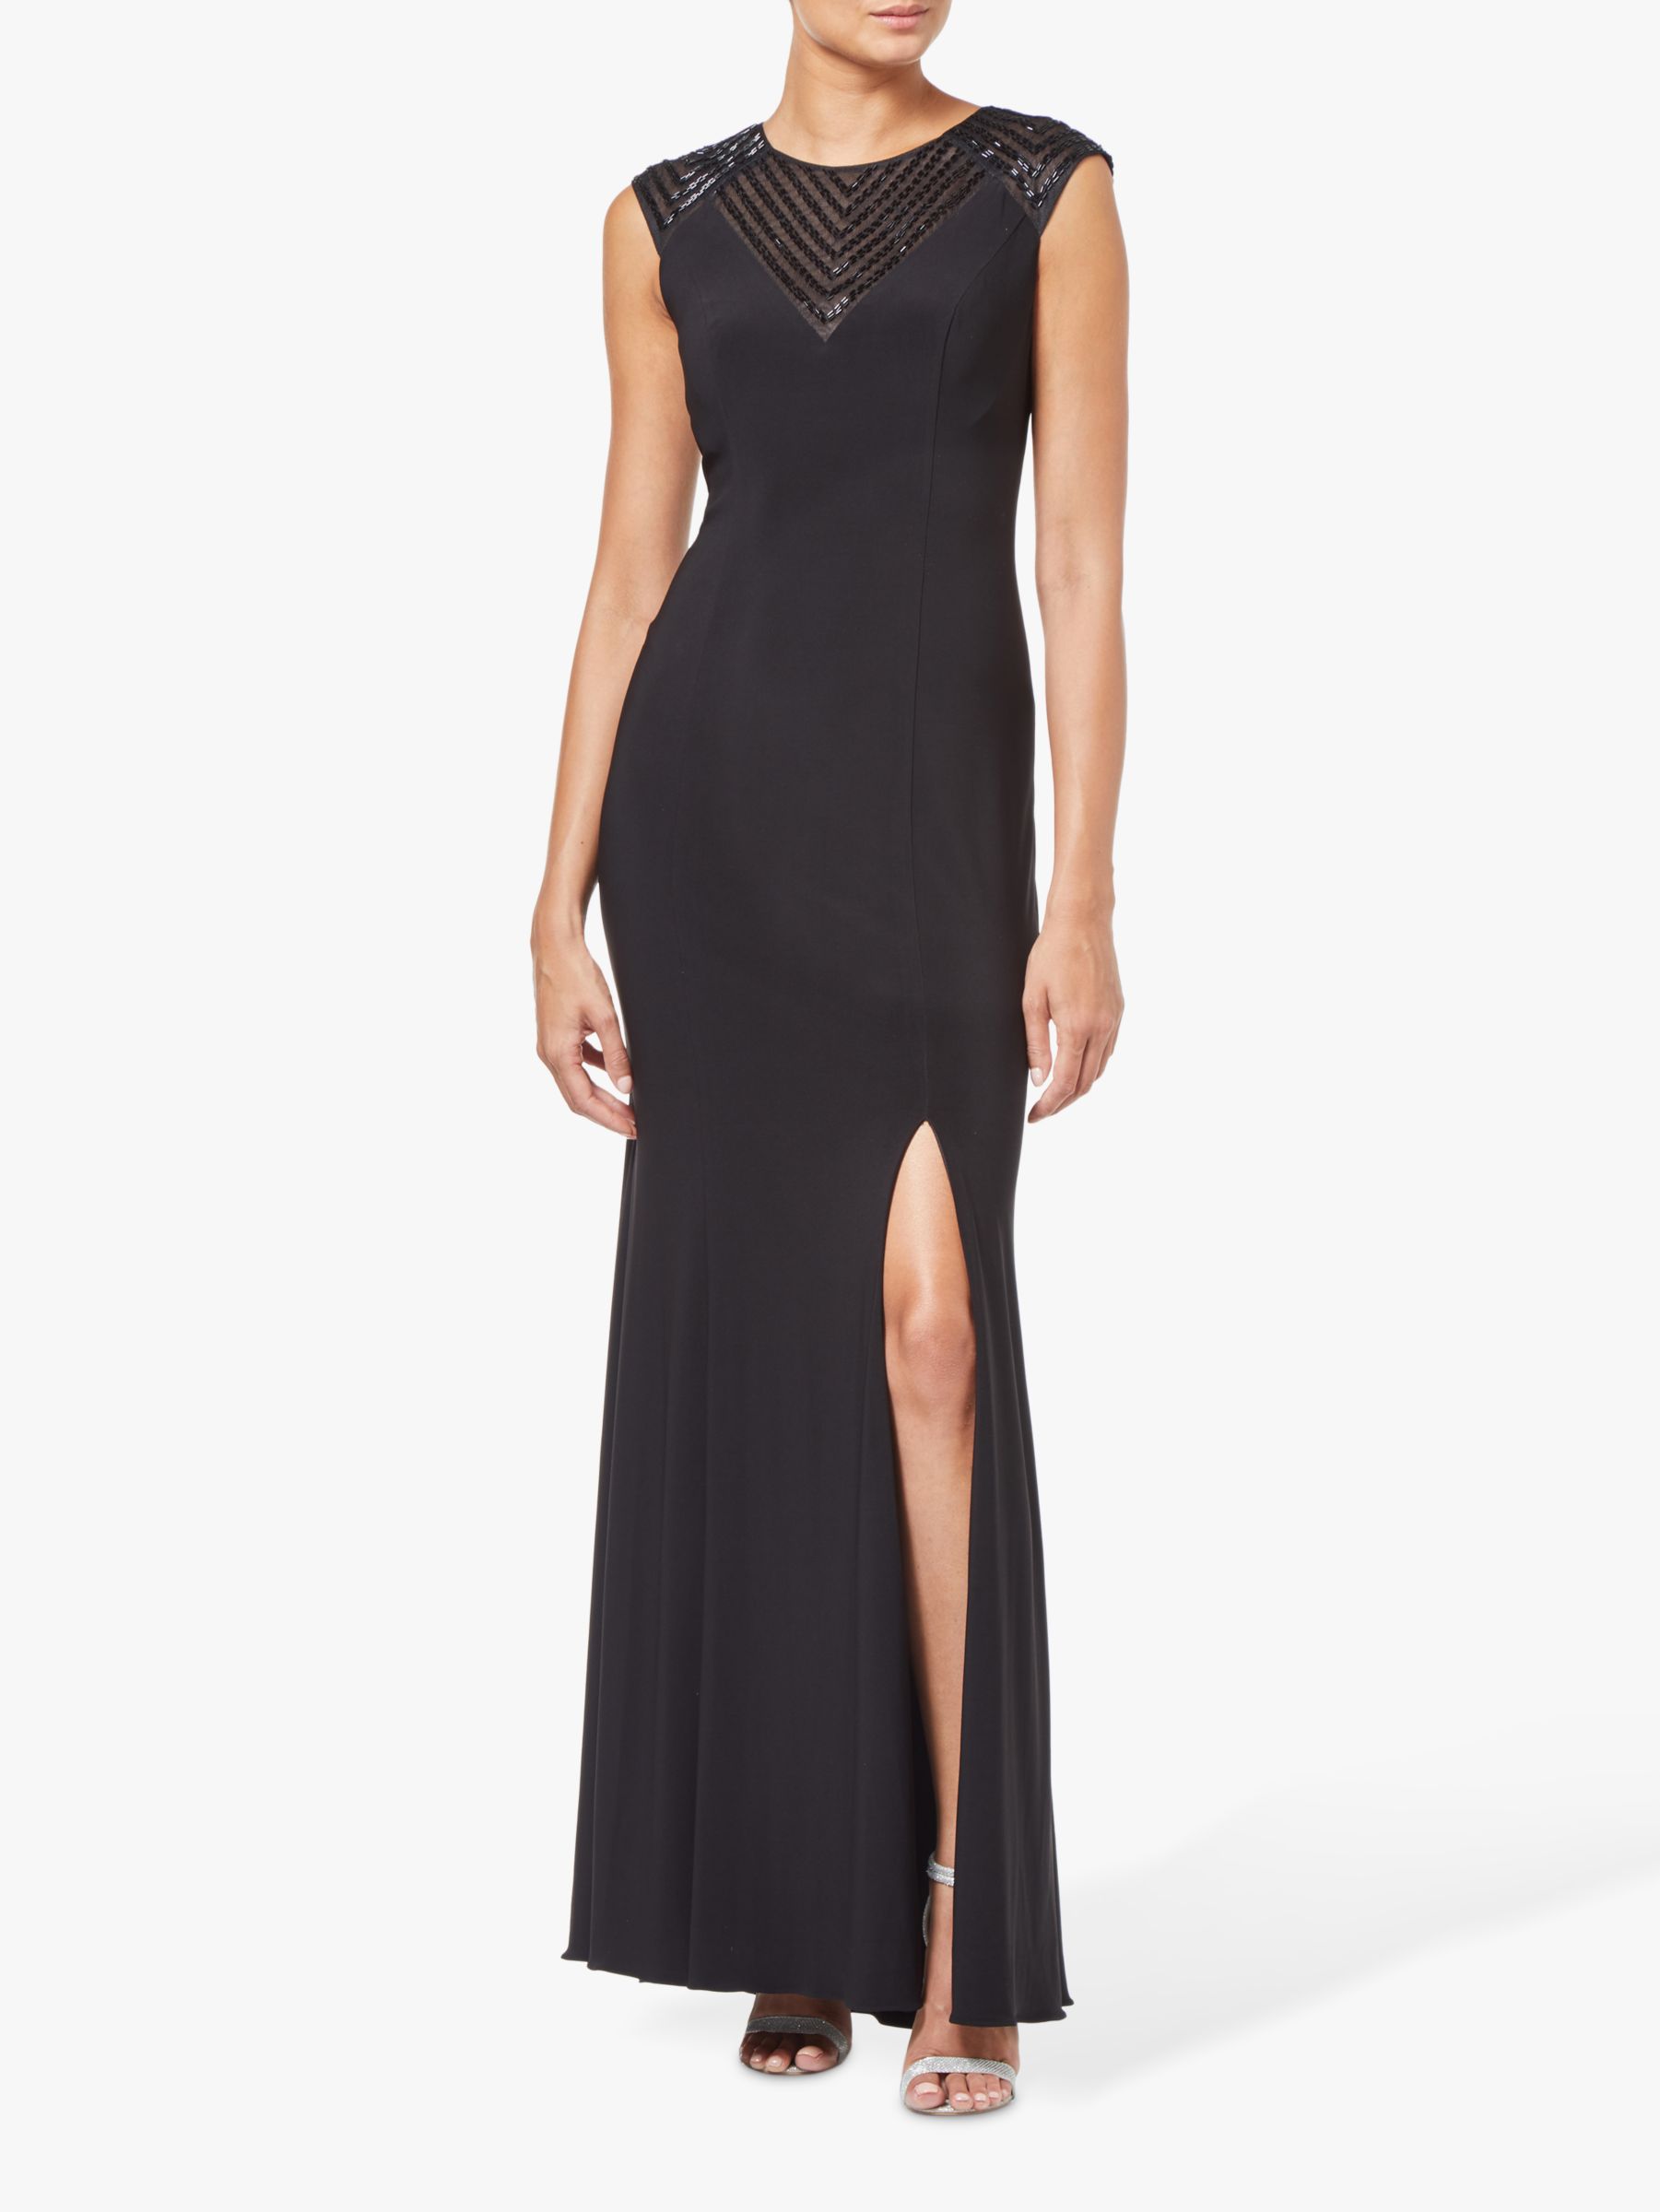 Adrianna Papell Long Jersey Dress, Black